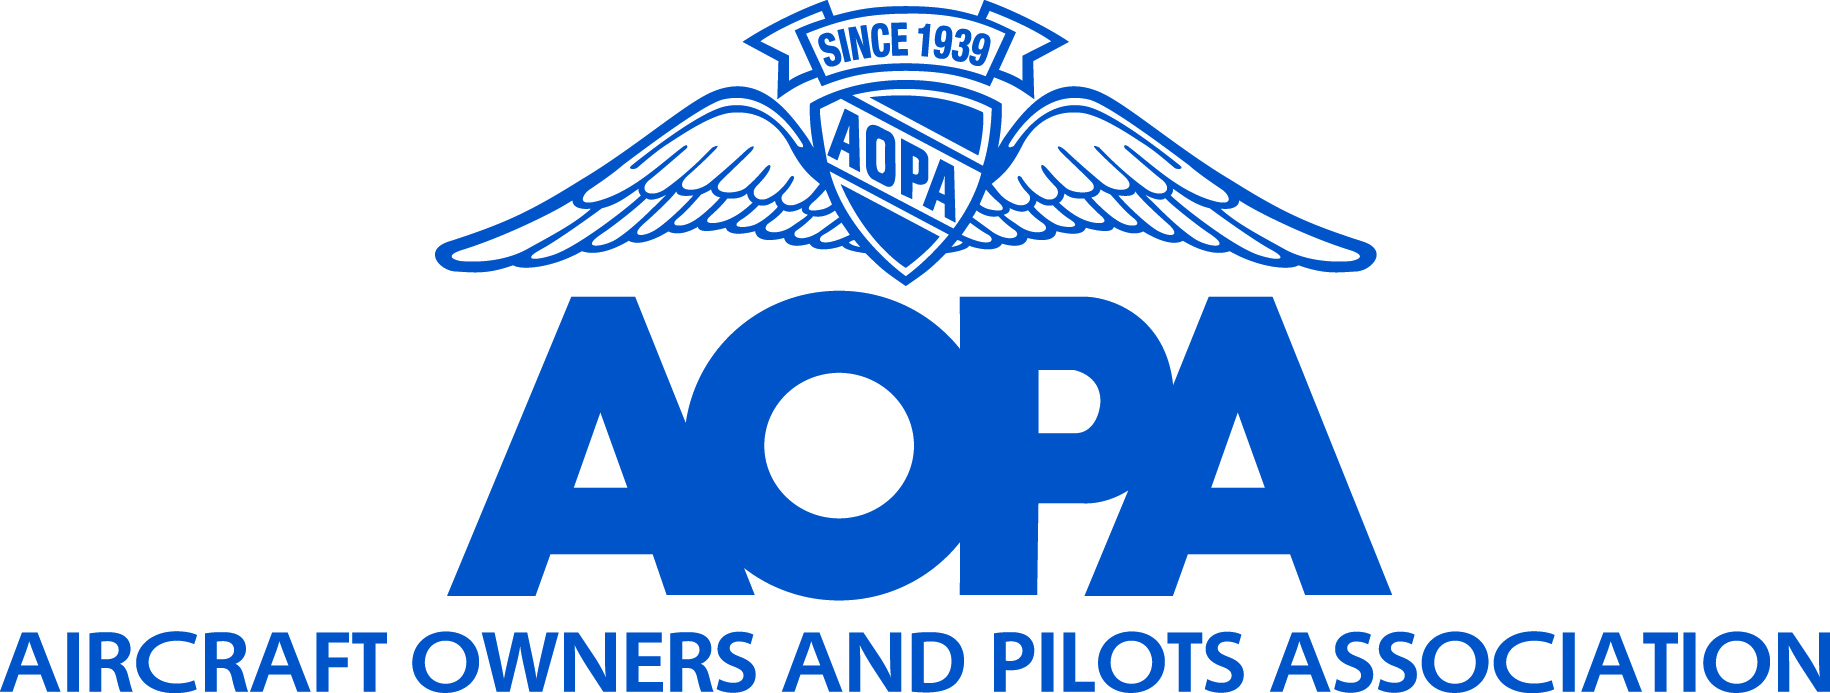 File:AOPA Israel Logo.png